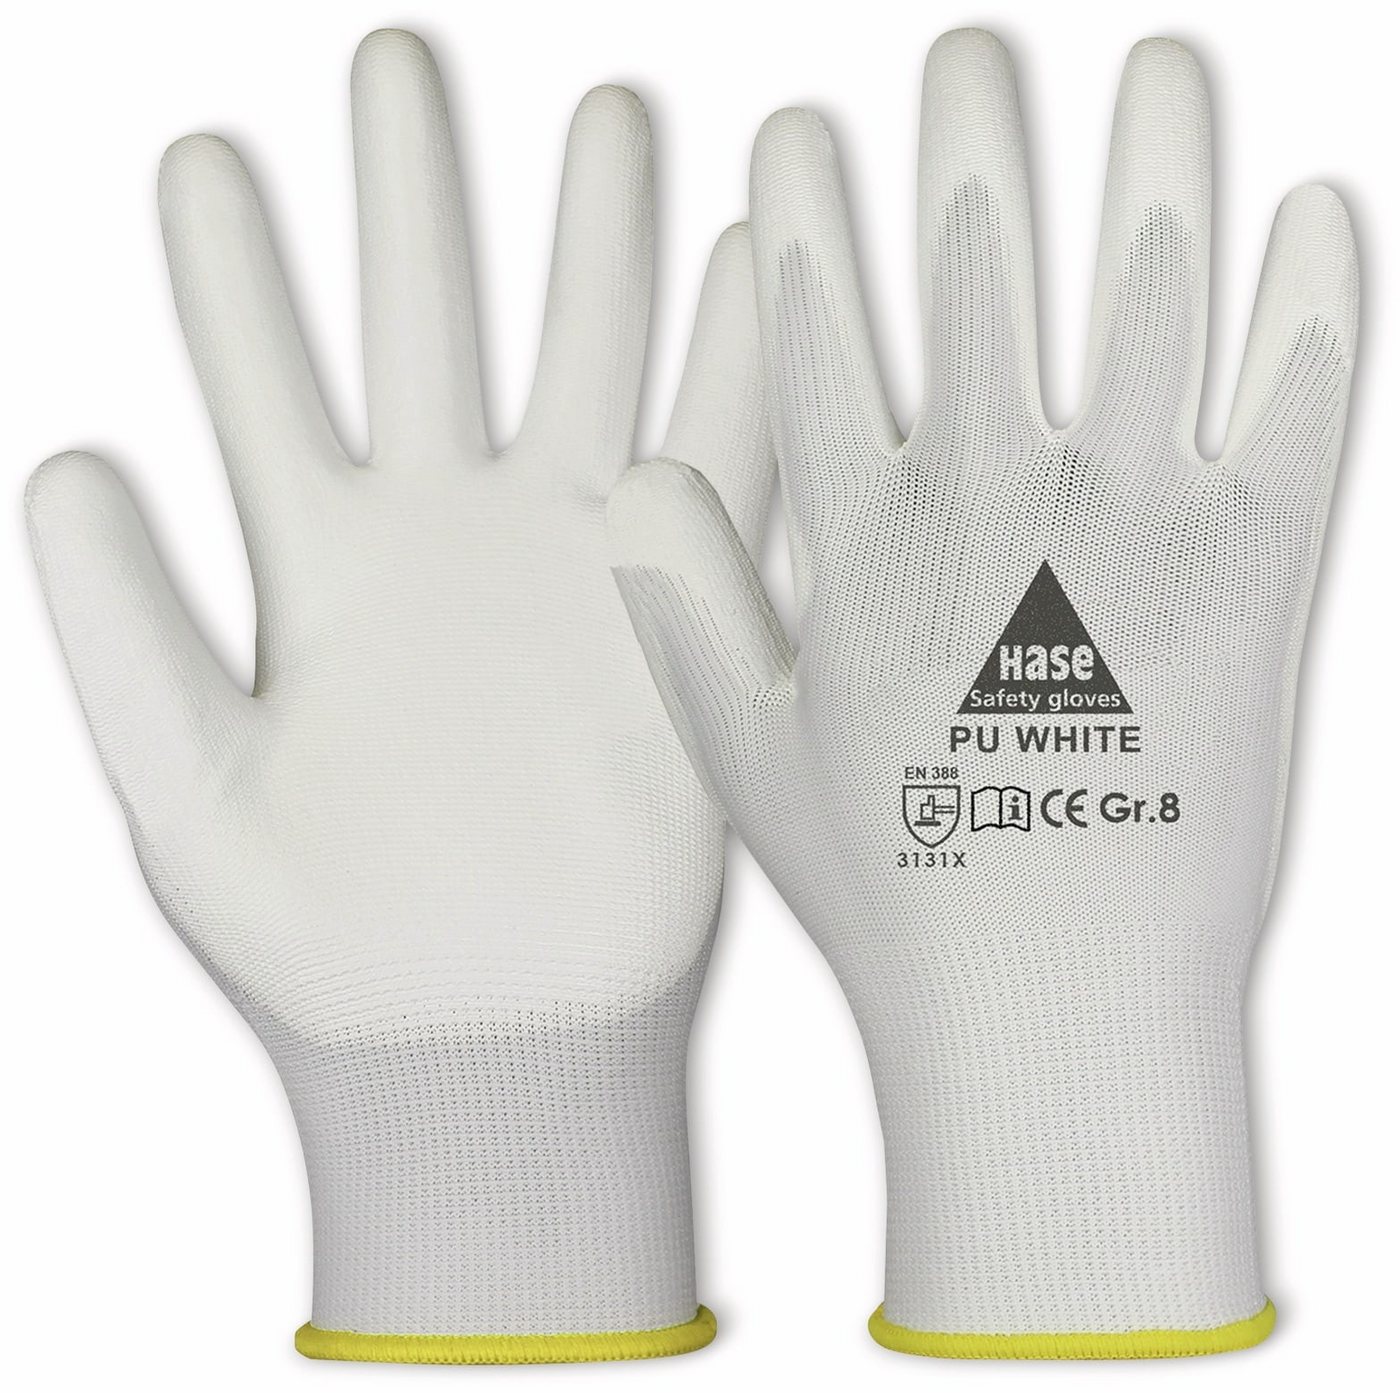 Hase Safety Gloves Arbeitshandschuhe HASE SAFETY GLOVES Arbeitshandschuhe PU, PU white von Hase Safety Gloves